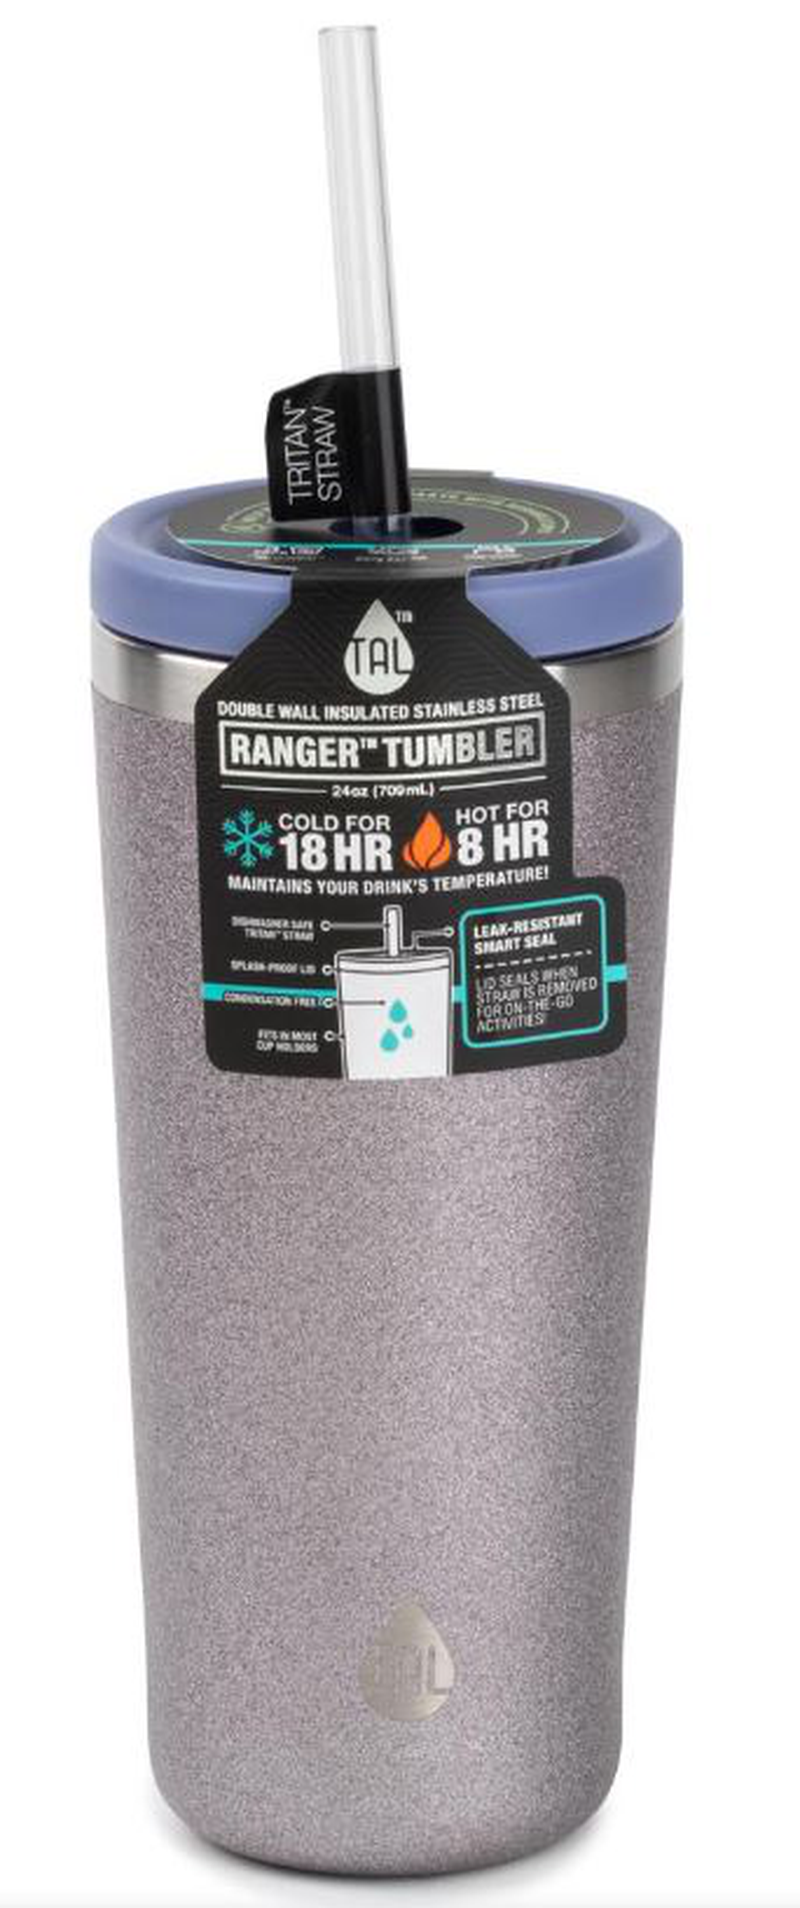 TAL Stainless Steel Ranger Tumbler Water Bottle 24 Fl Oz, Gray Steel